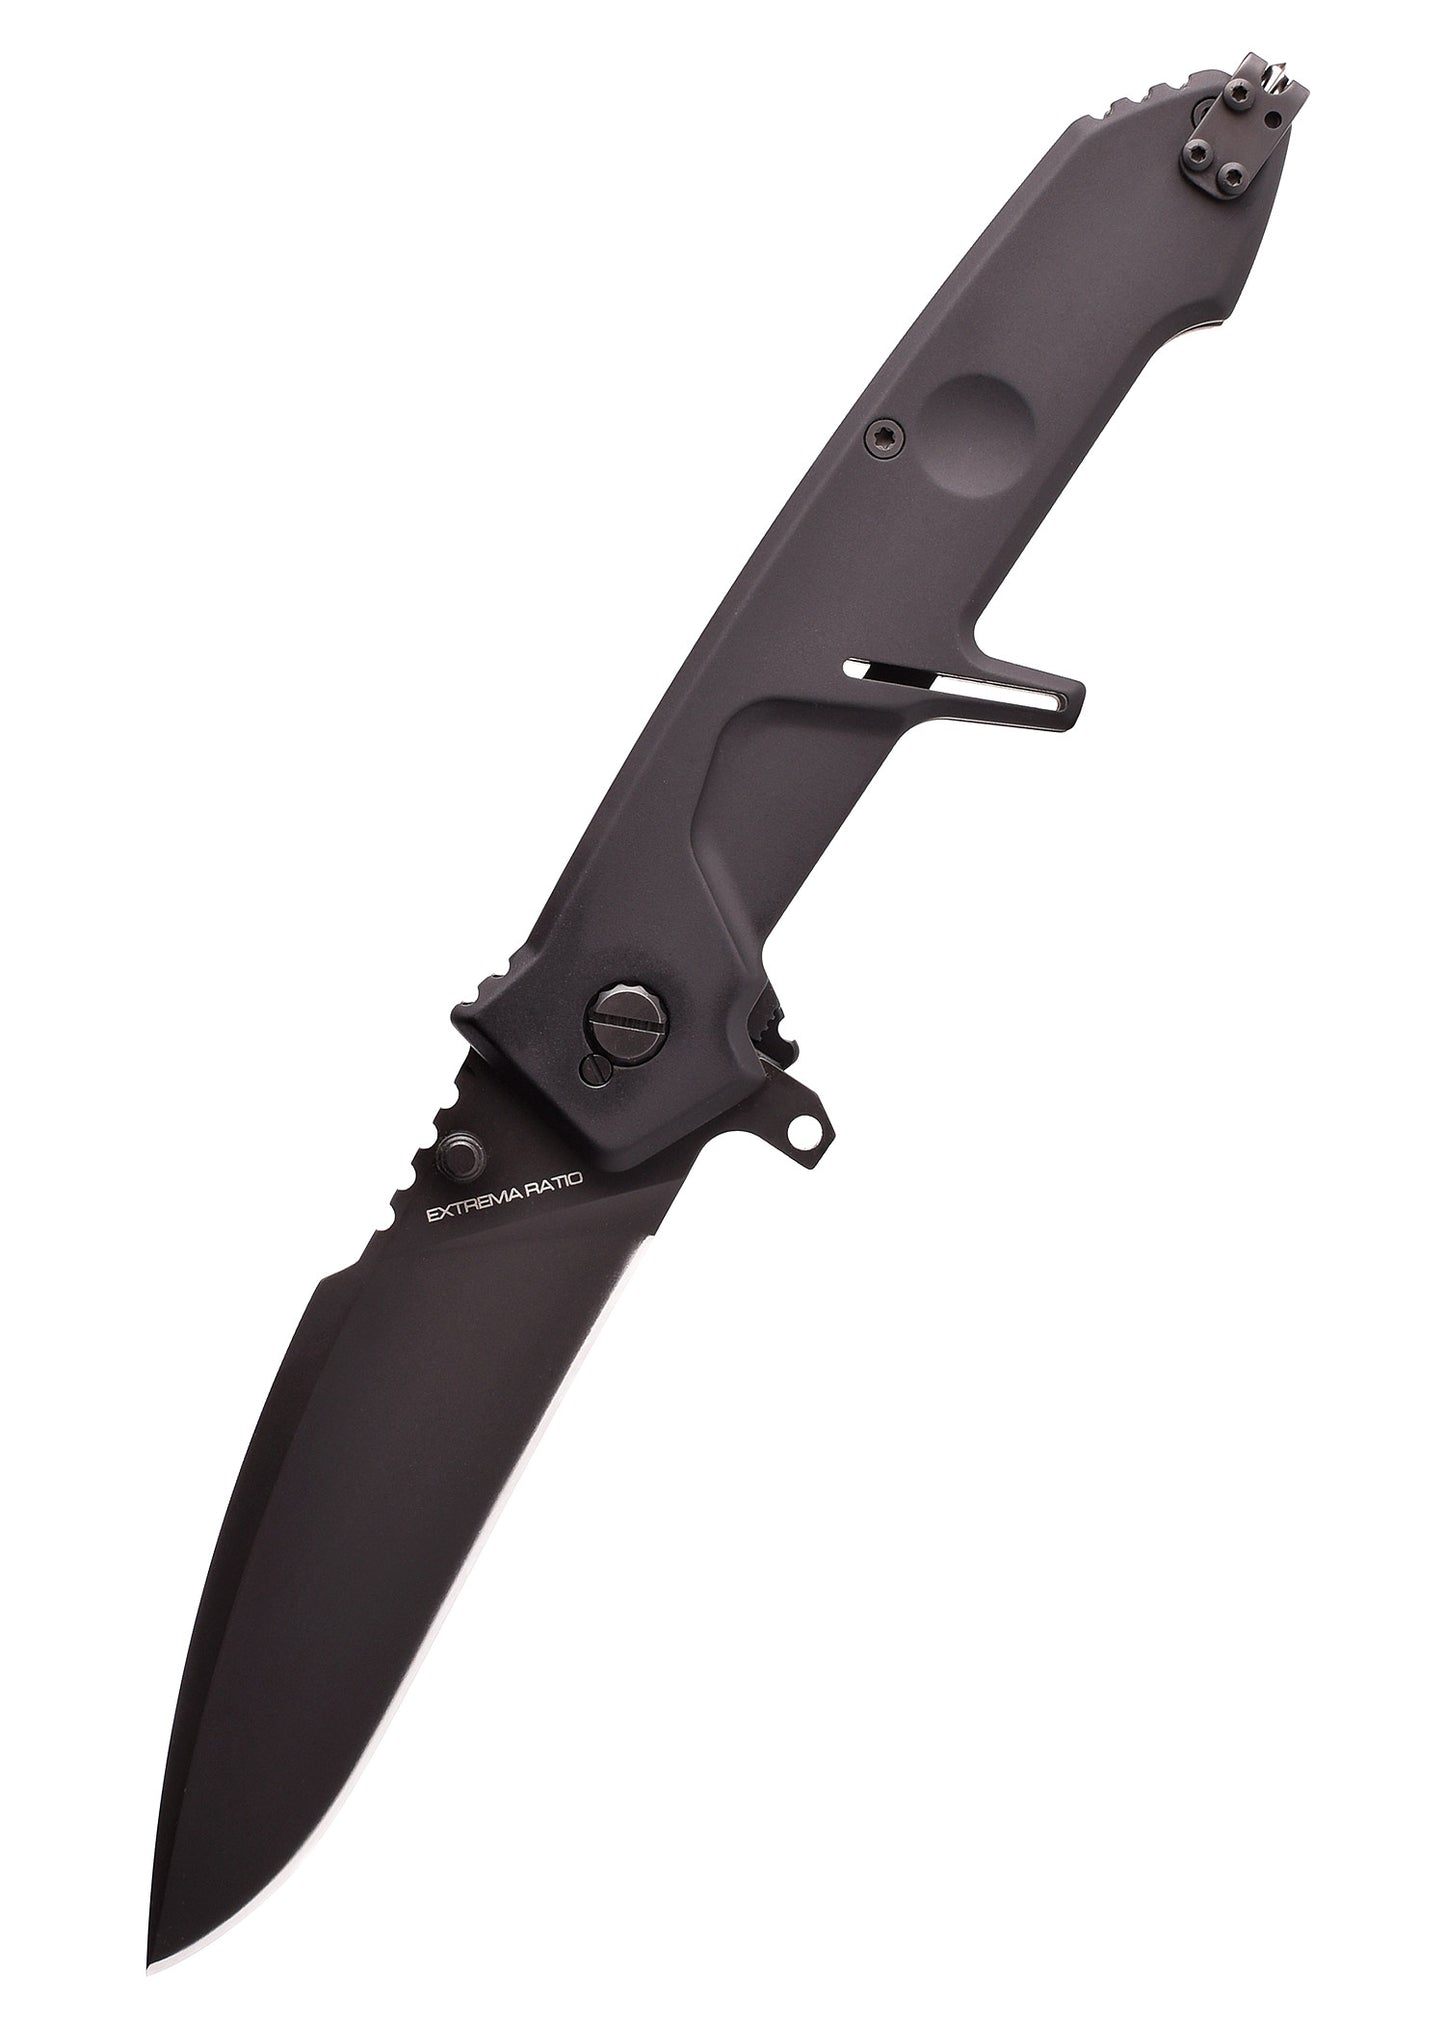 Couteau de poche Pocket knife MF2 black - Extrema Ratio-T.A DEFENSE